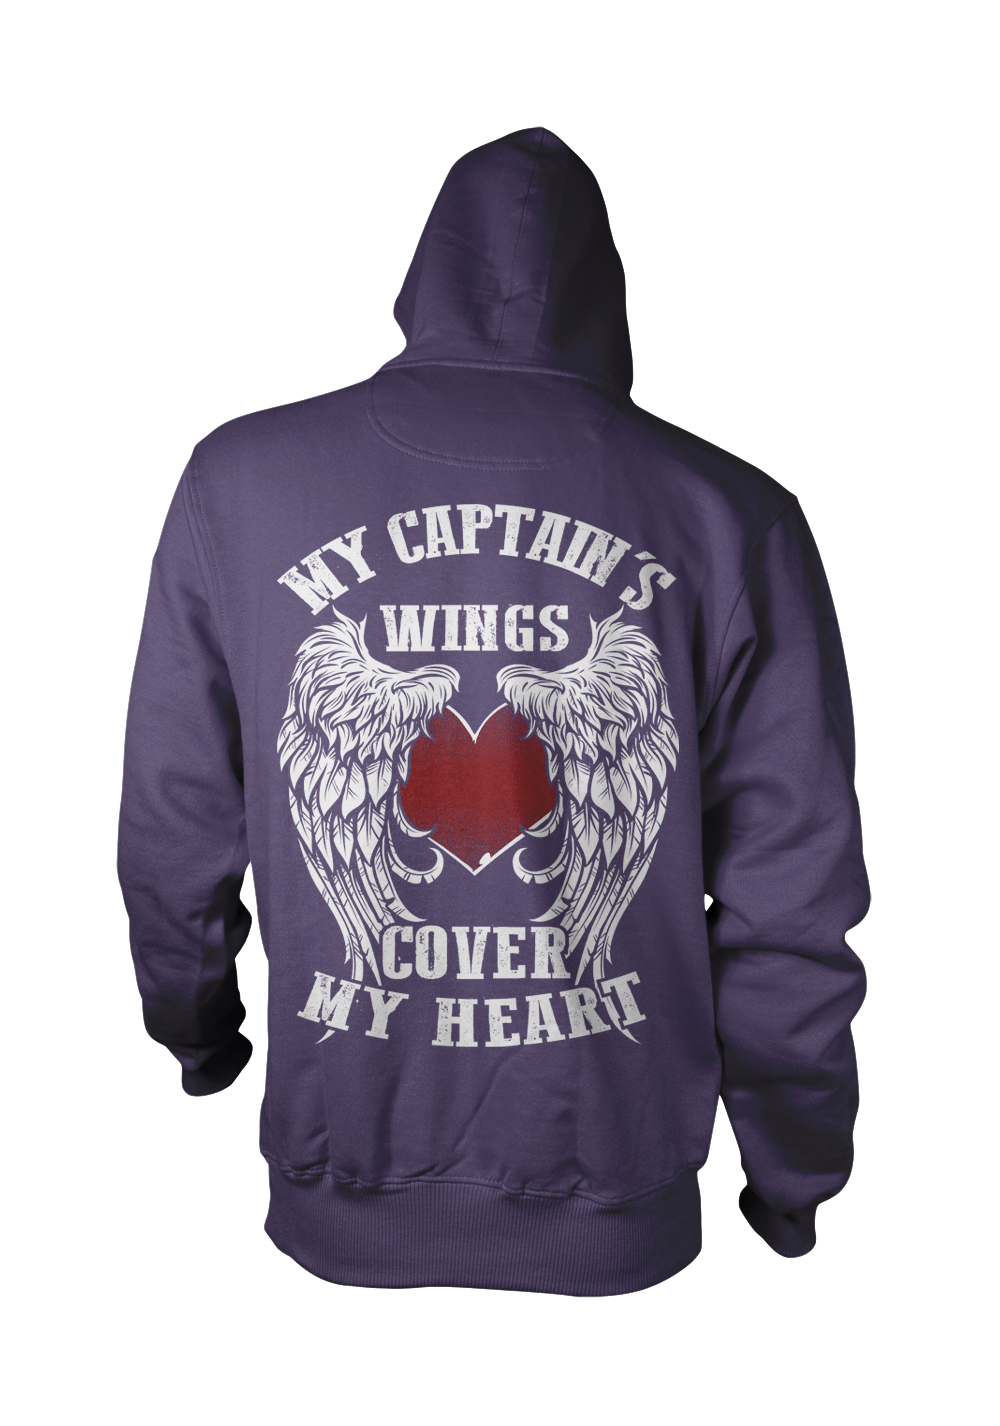 My Captain's Wings Cover My Heart Hoodie